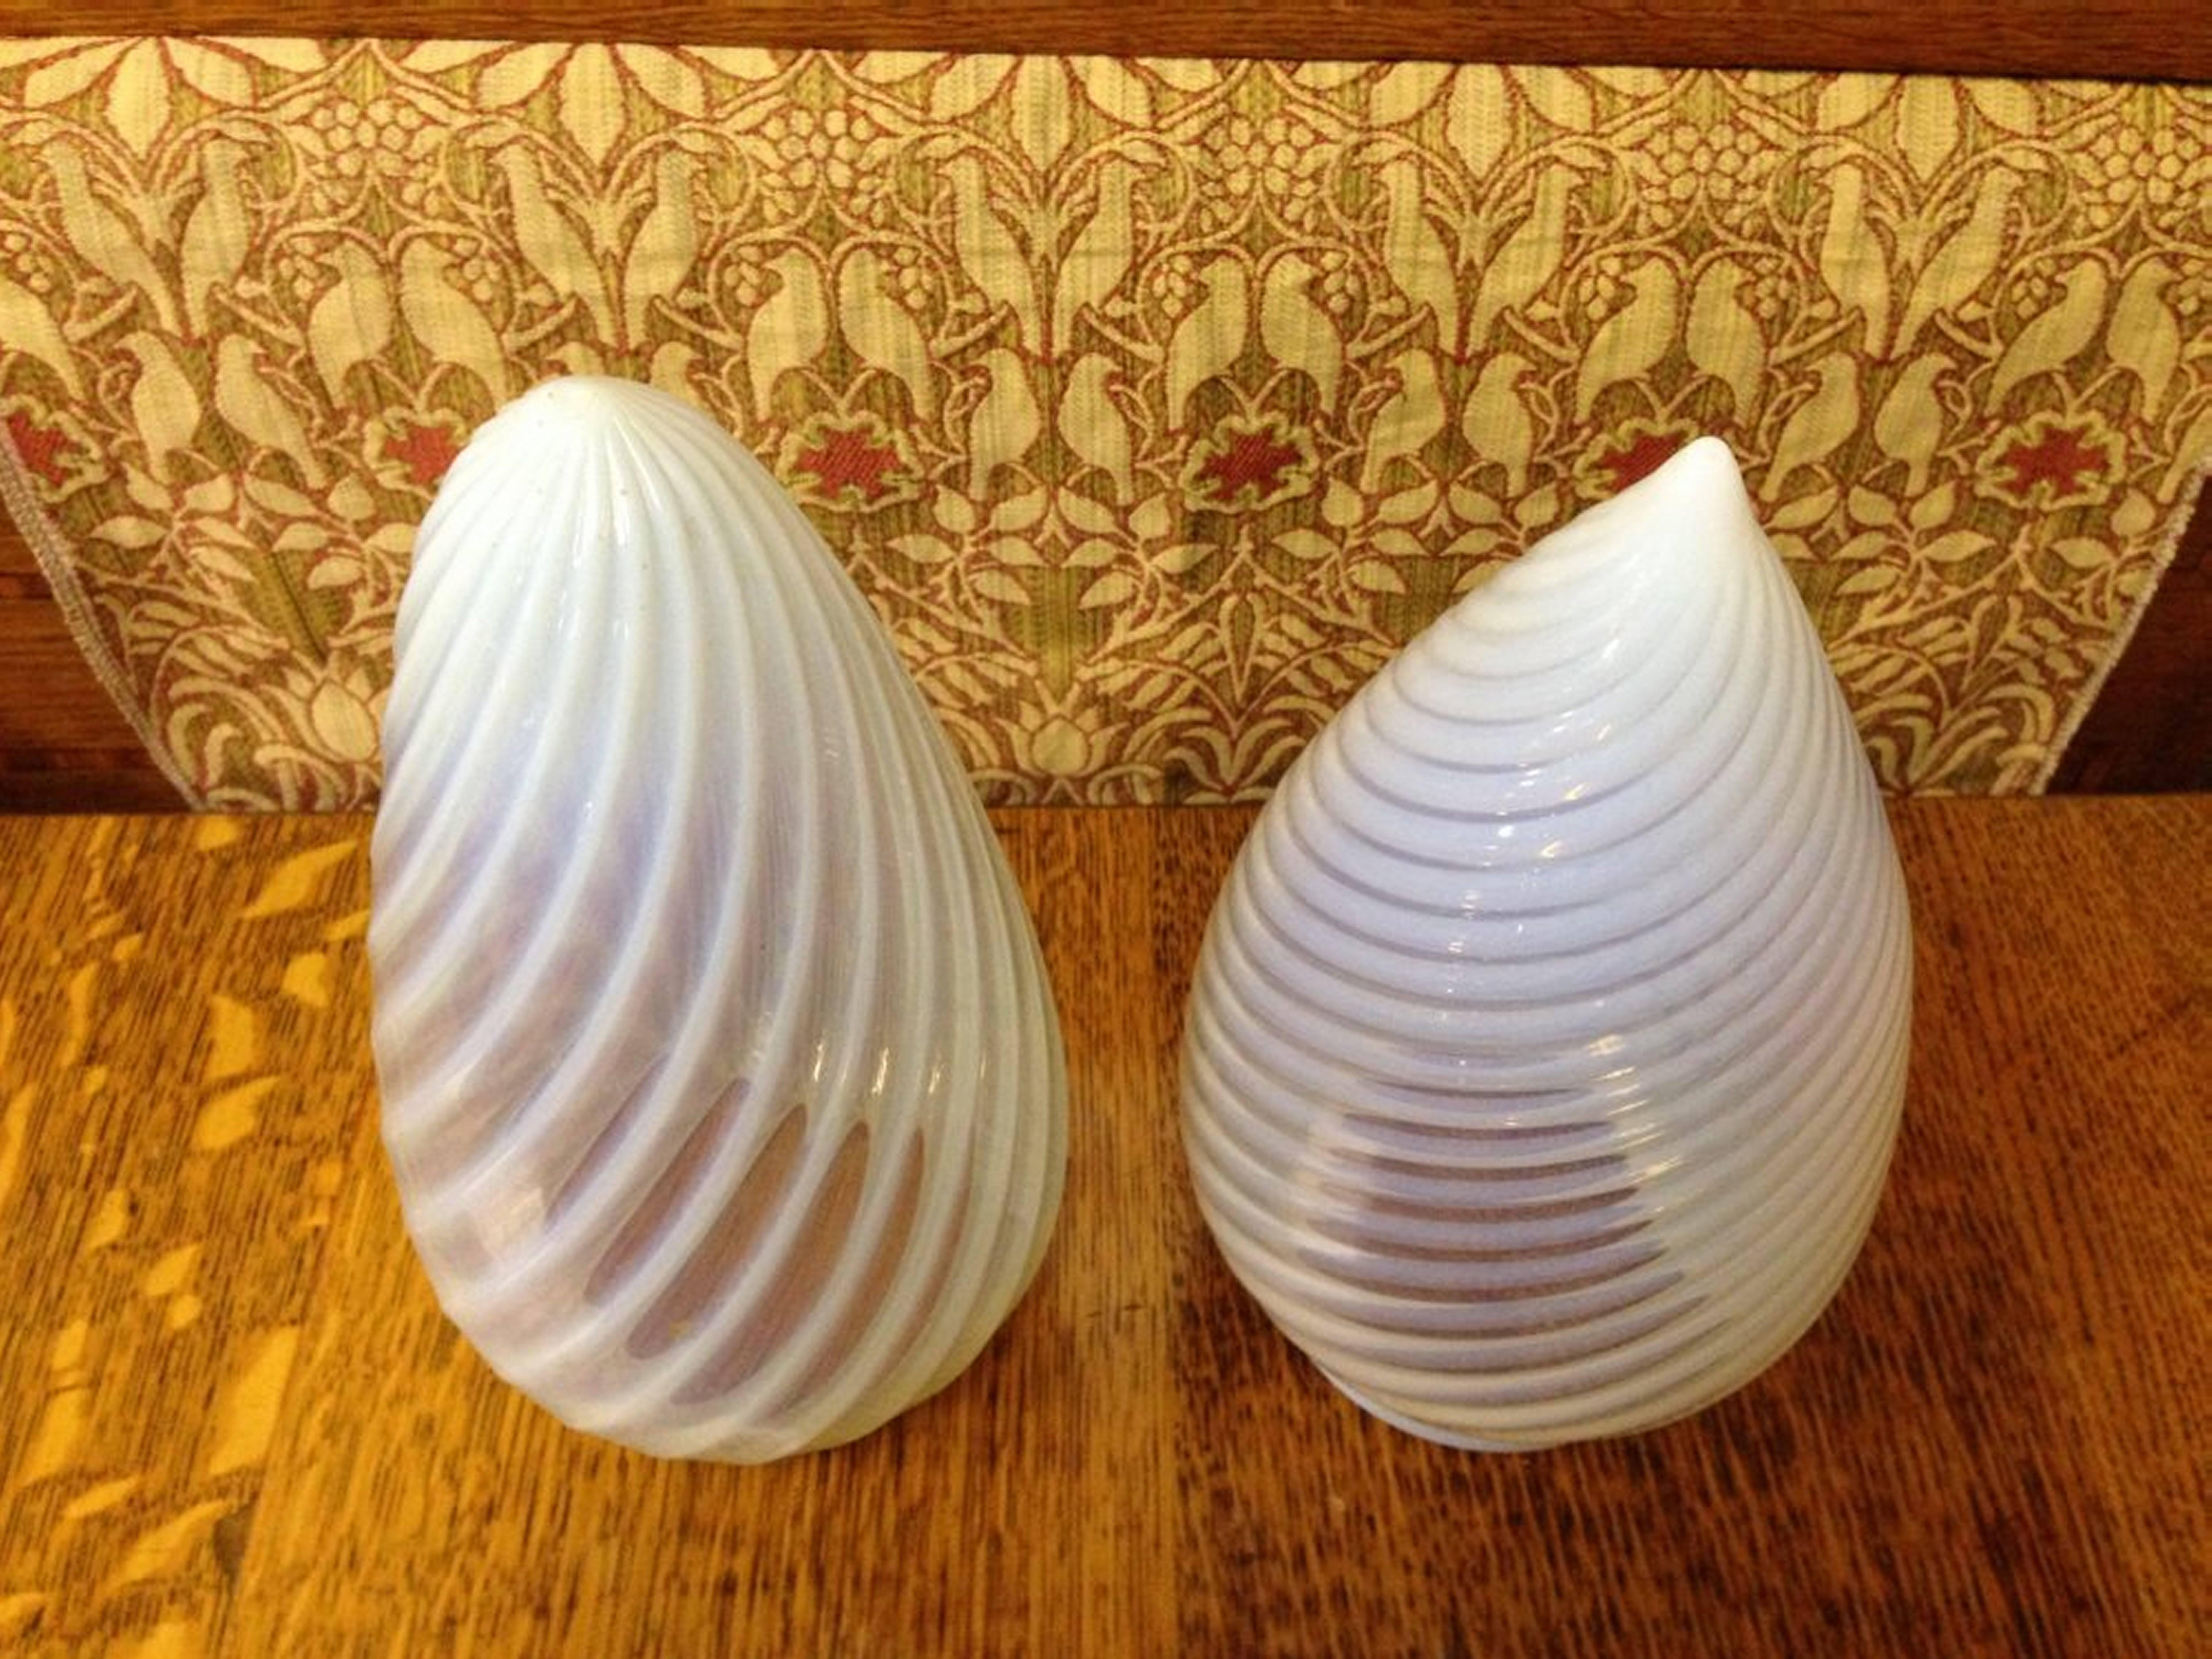 Left: A swirl Vaseline shade. Height 8 1/2